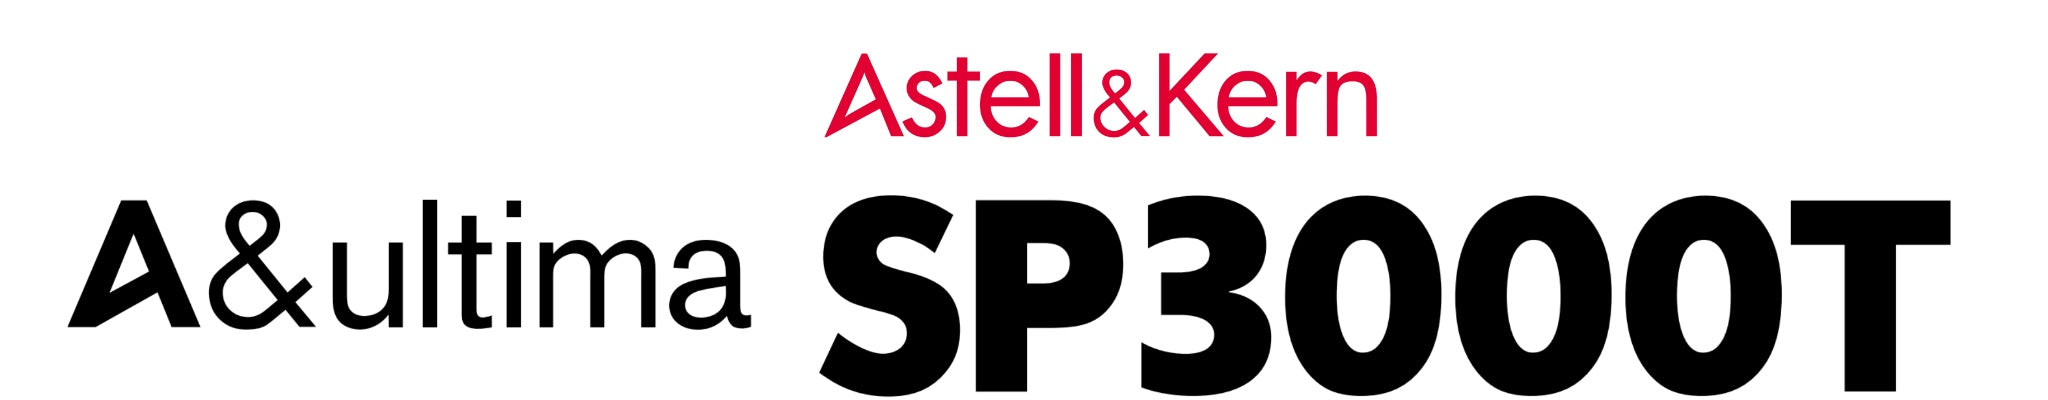 Astell&Kern SP3000T logo